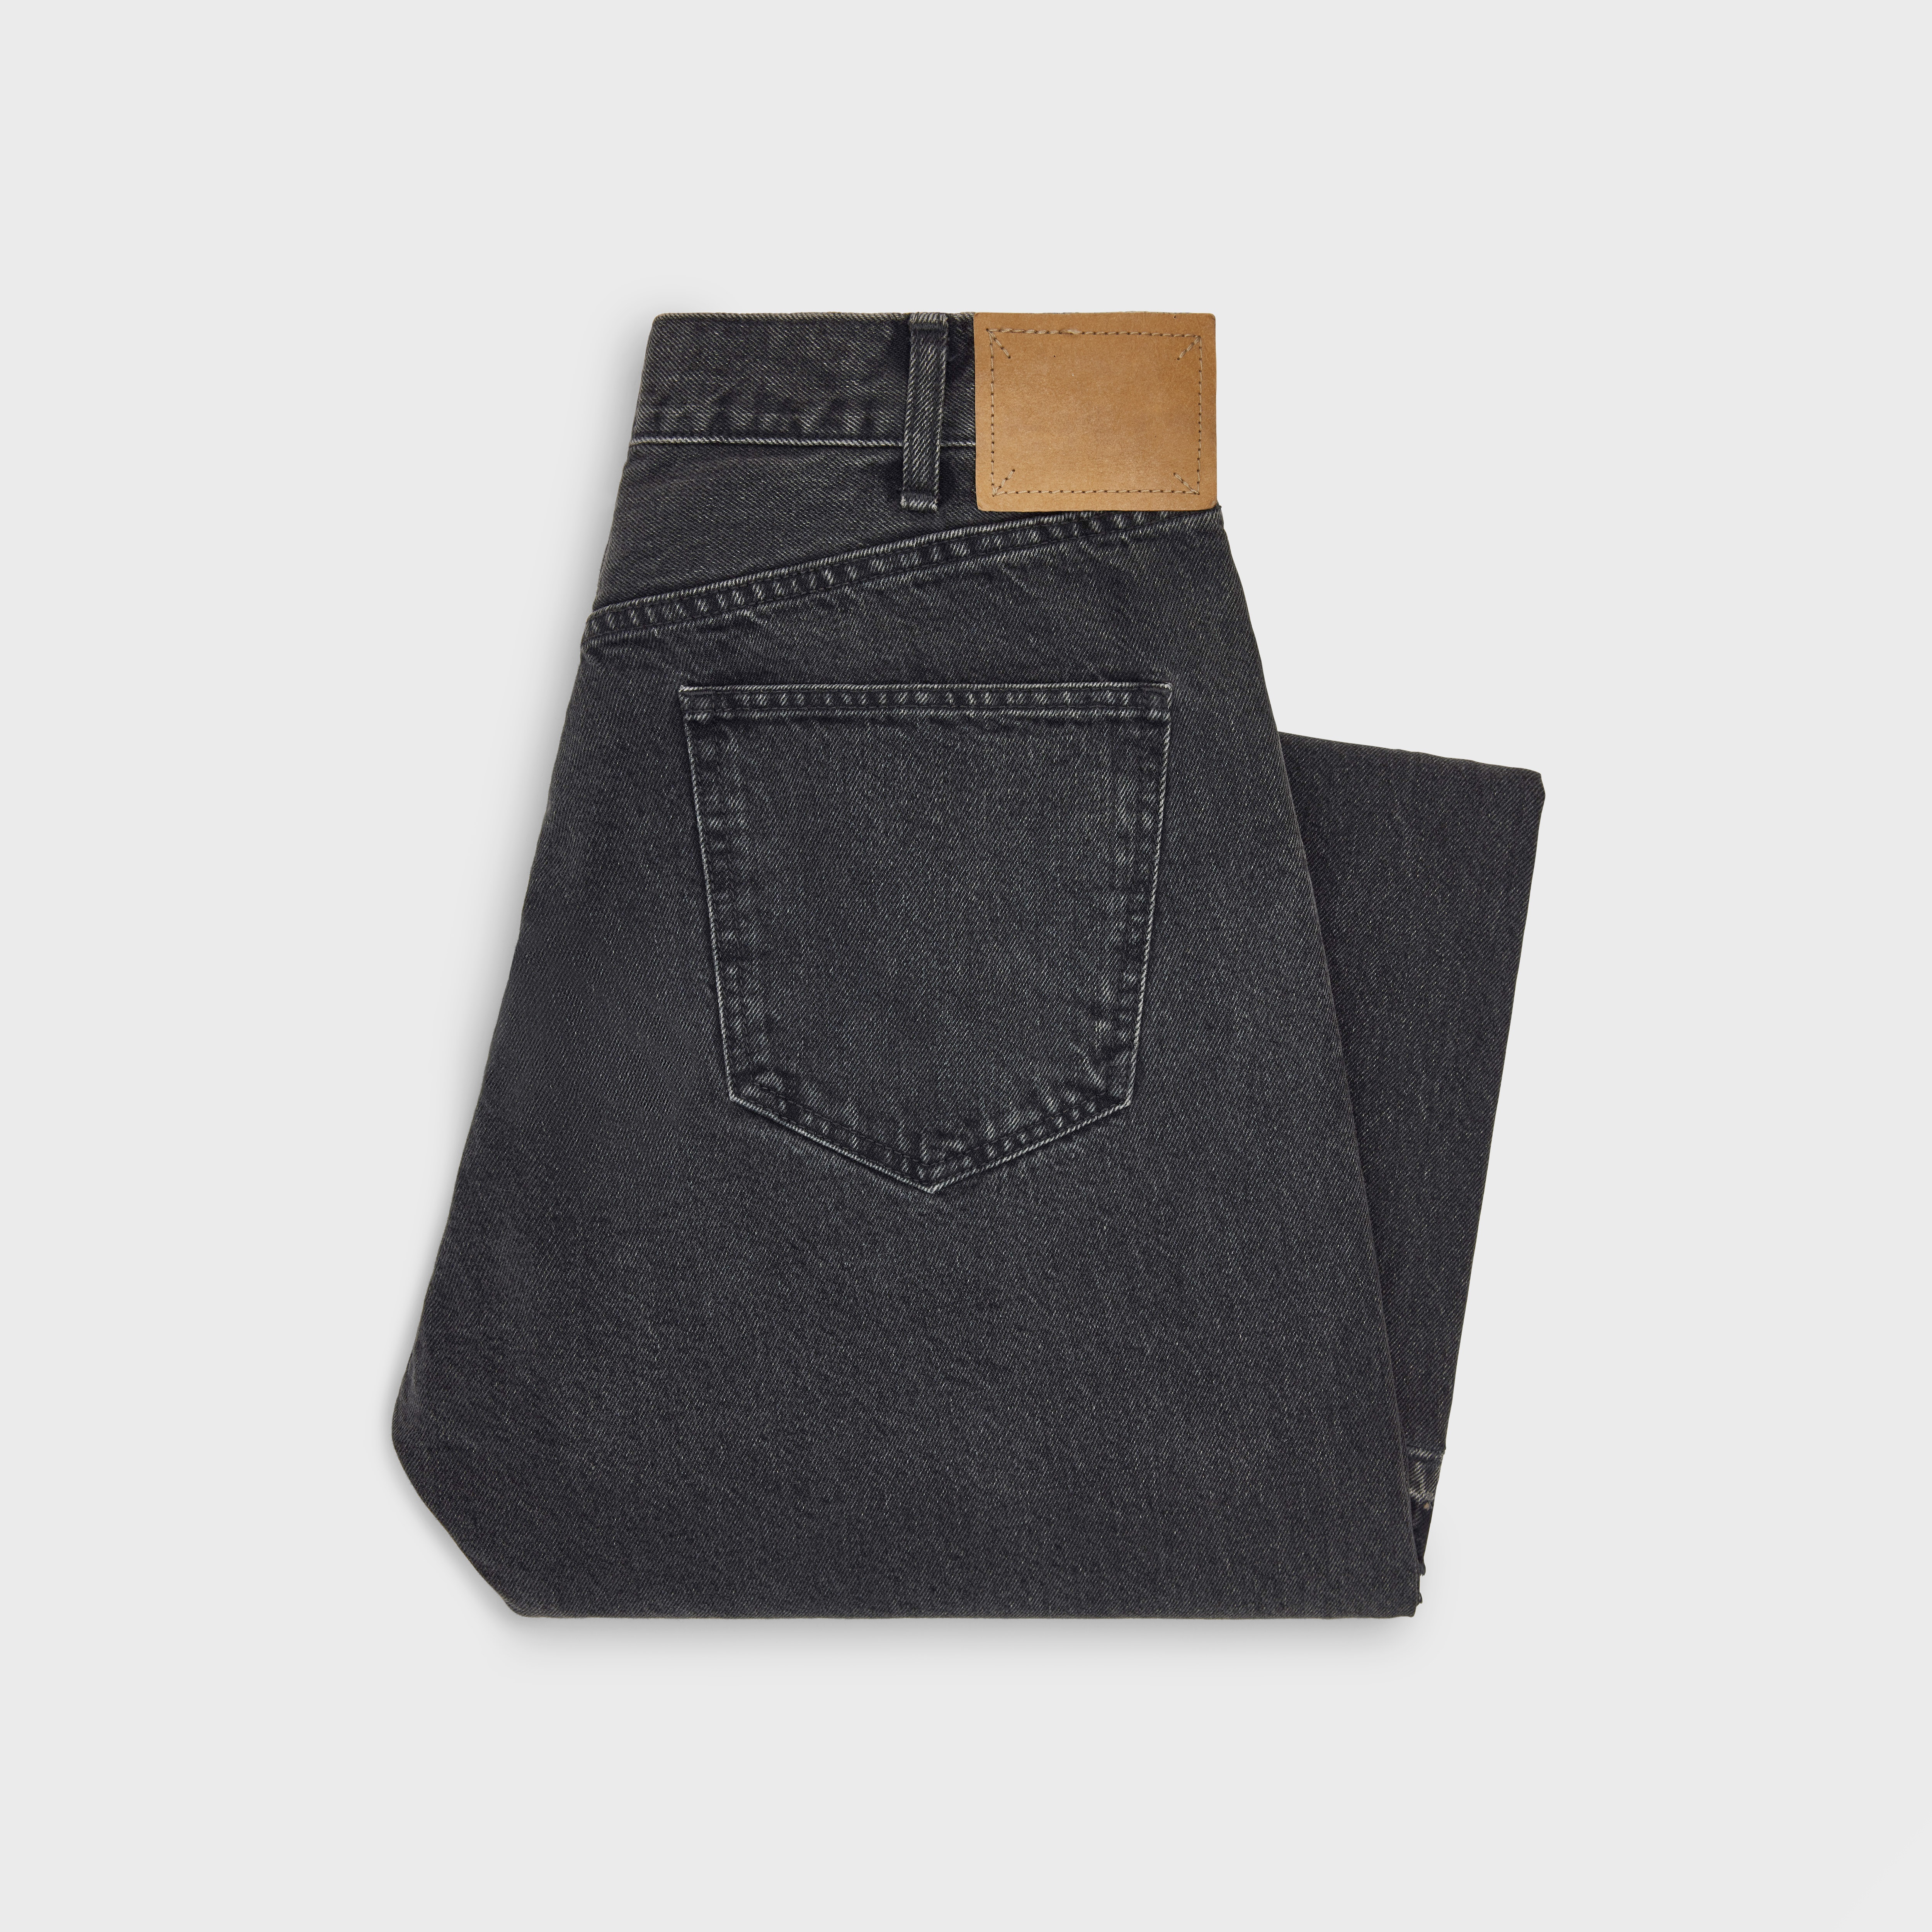 Wesley jeans in charcoal wash denim - 2